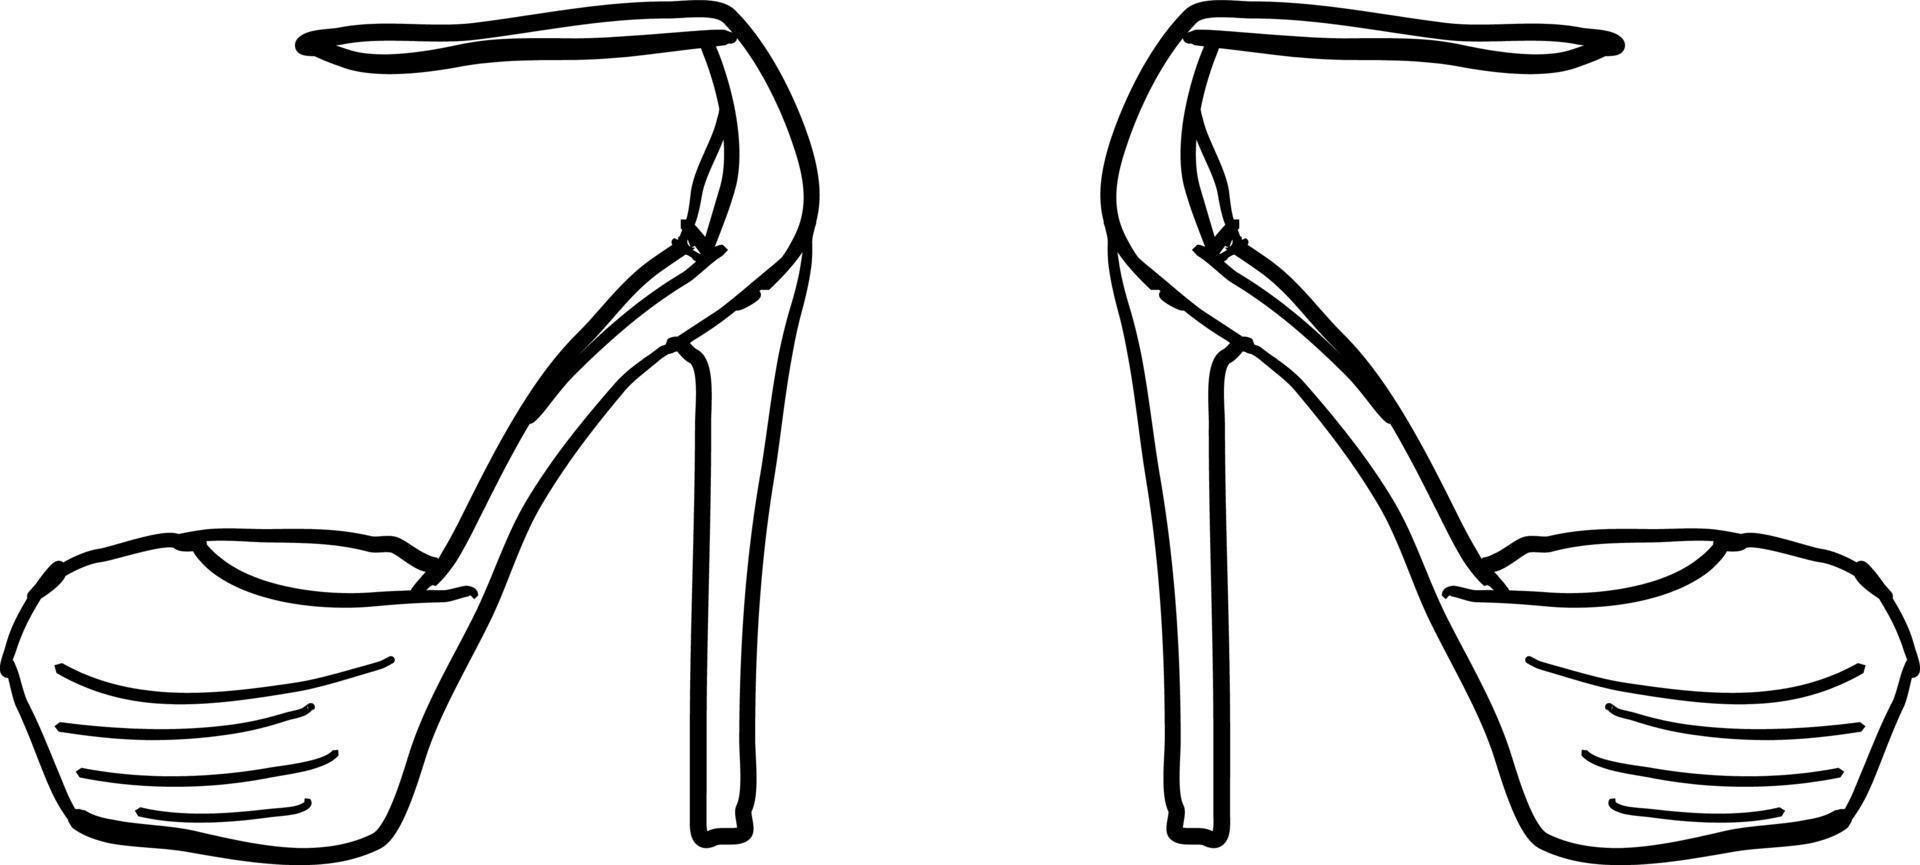 Heels sketch, illustration, vector on white background.